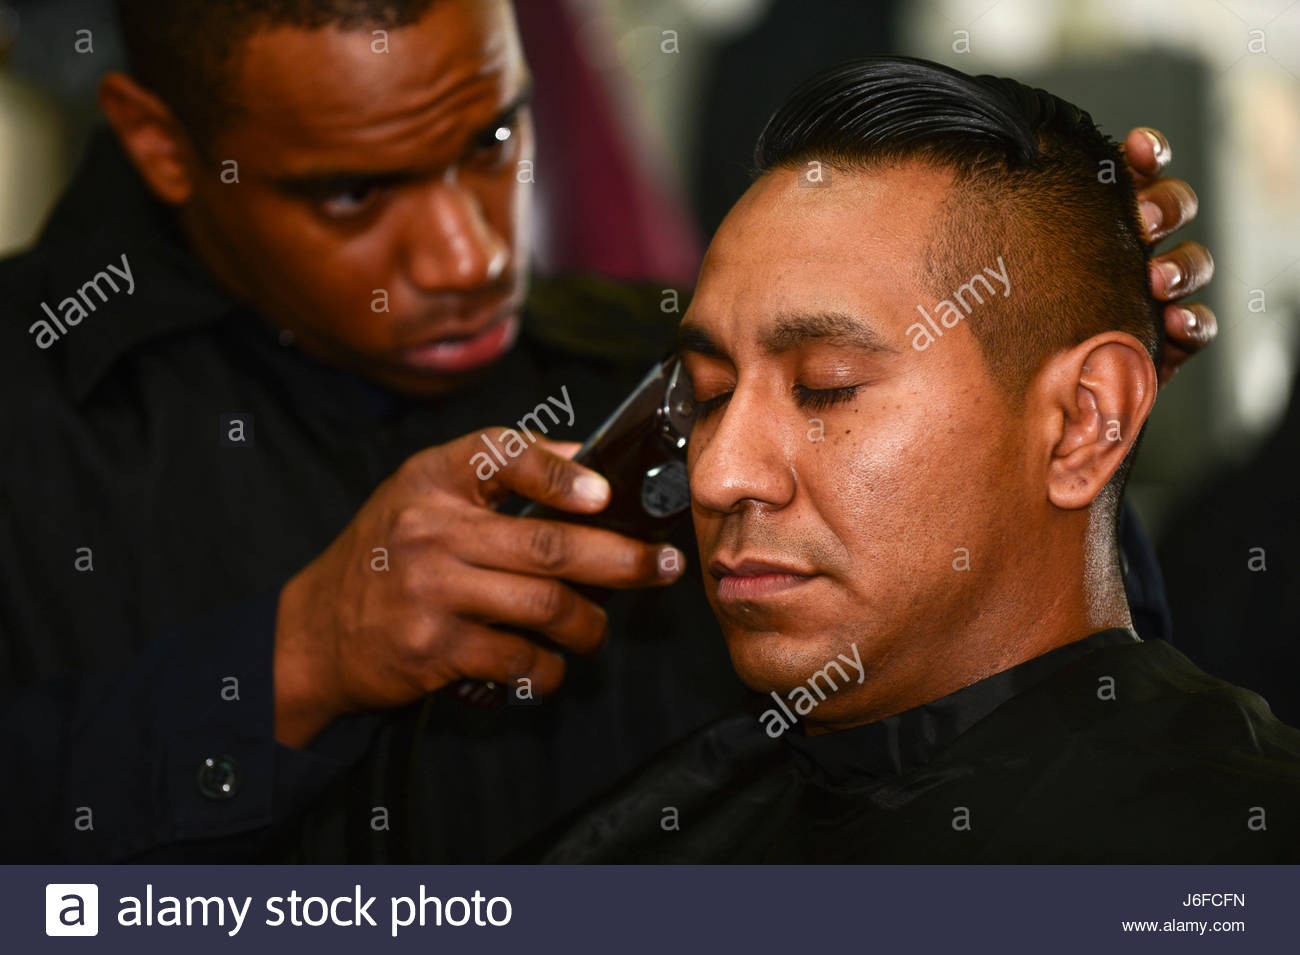 Soldaten Haarschnitt
 Military Haircut Stockfotos & Military Haircut Bilder